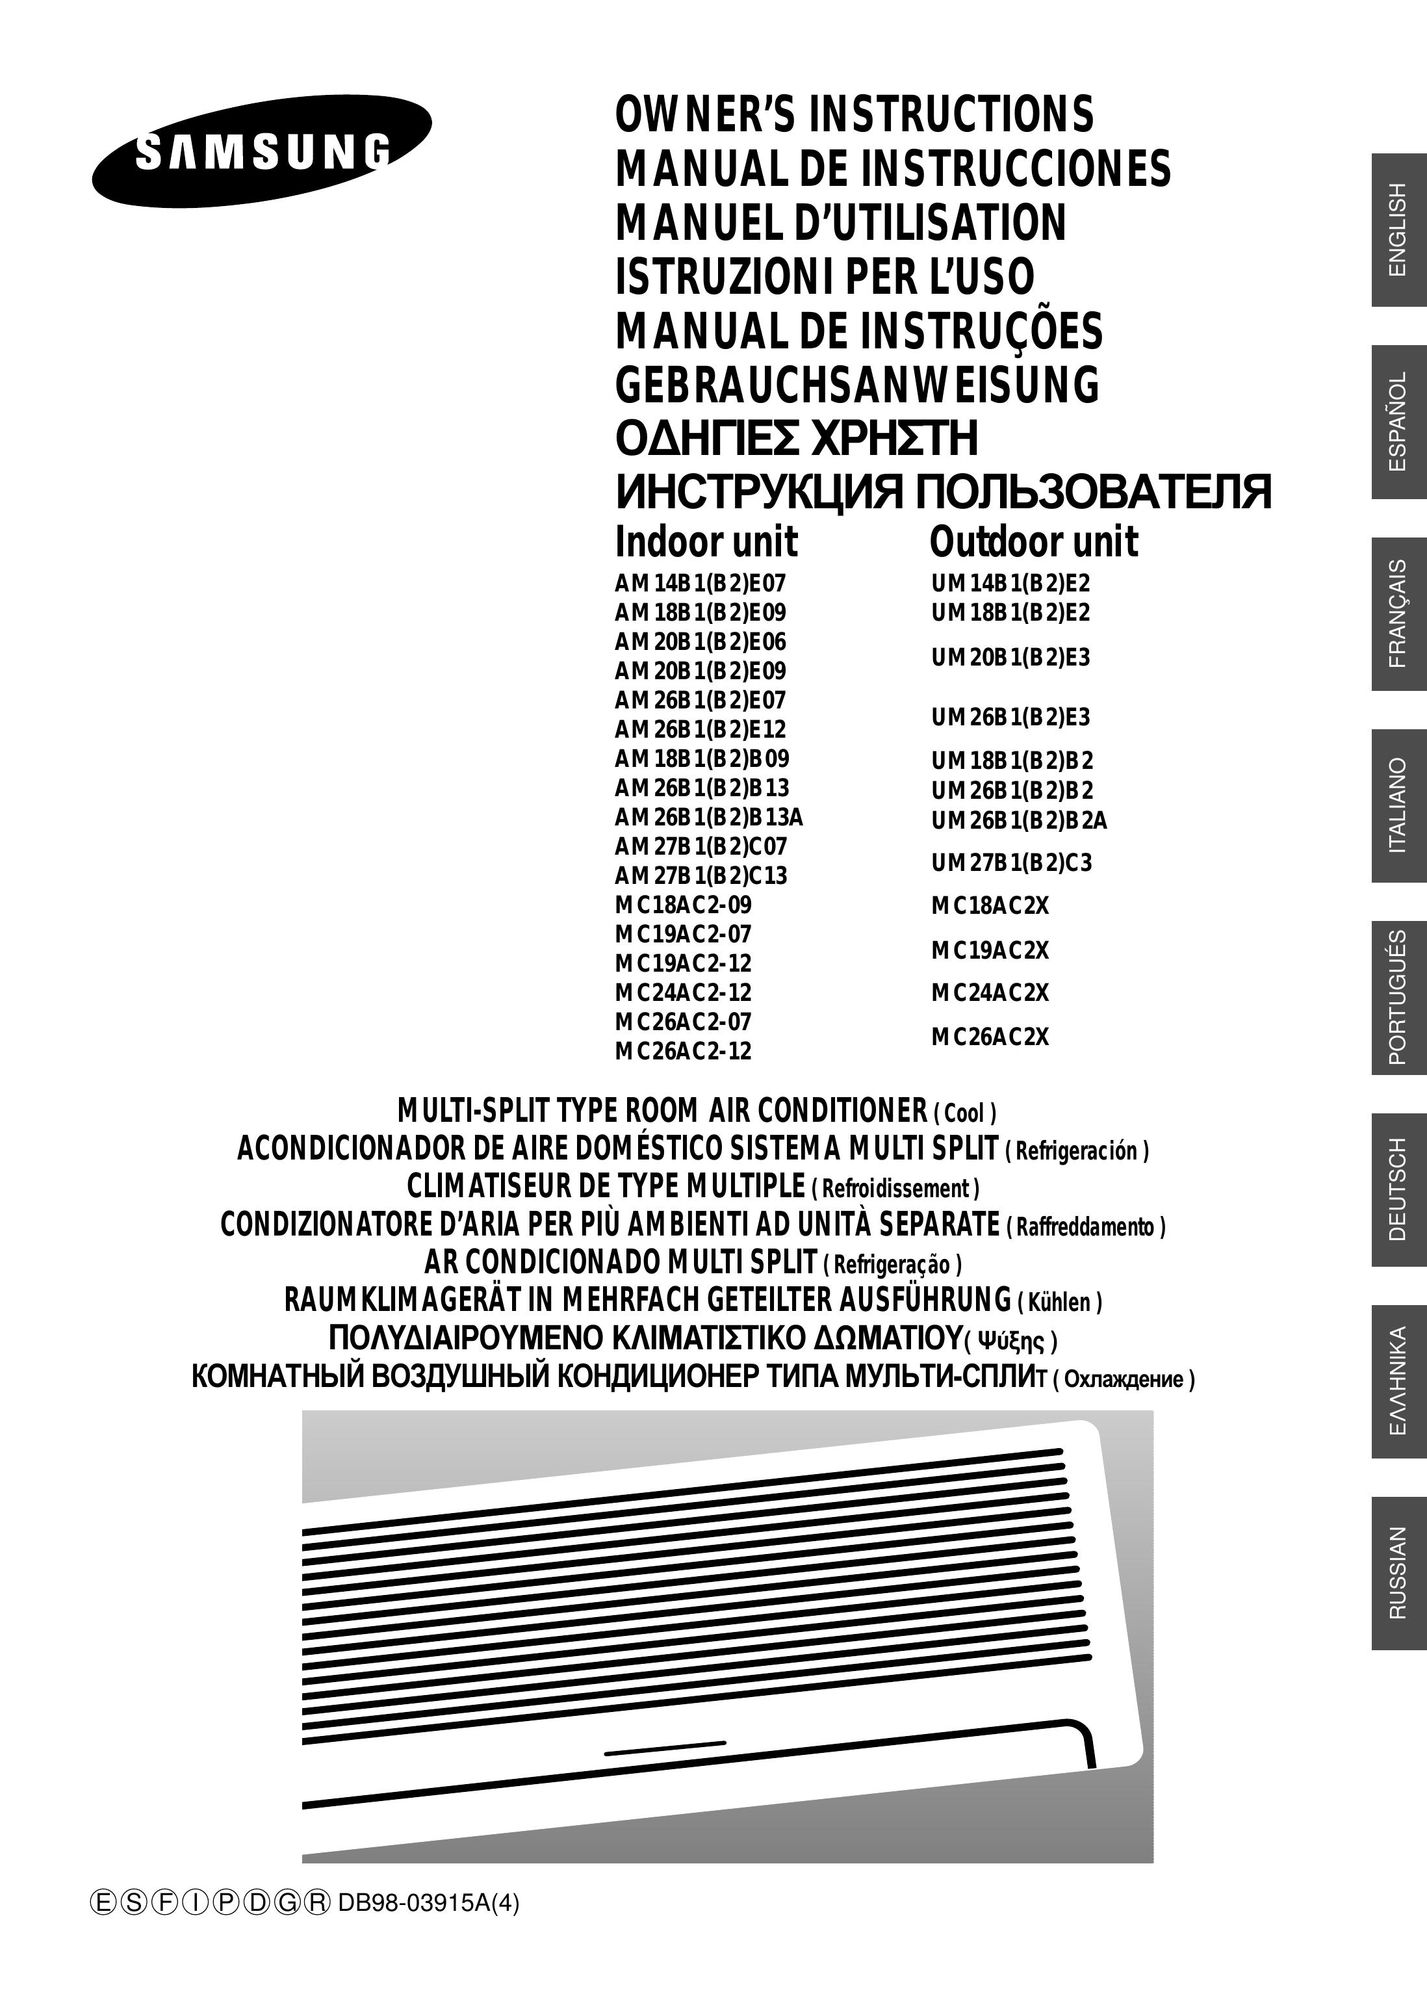 Samsung AM26B1(B2)B13 Air Conditioner User Manual